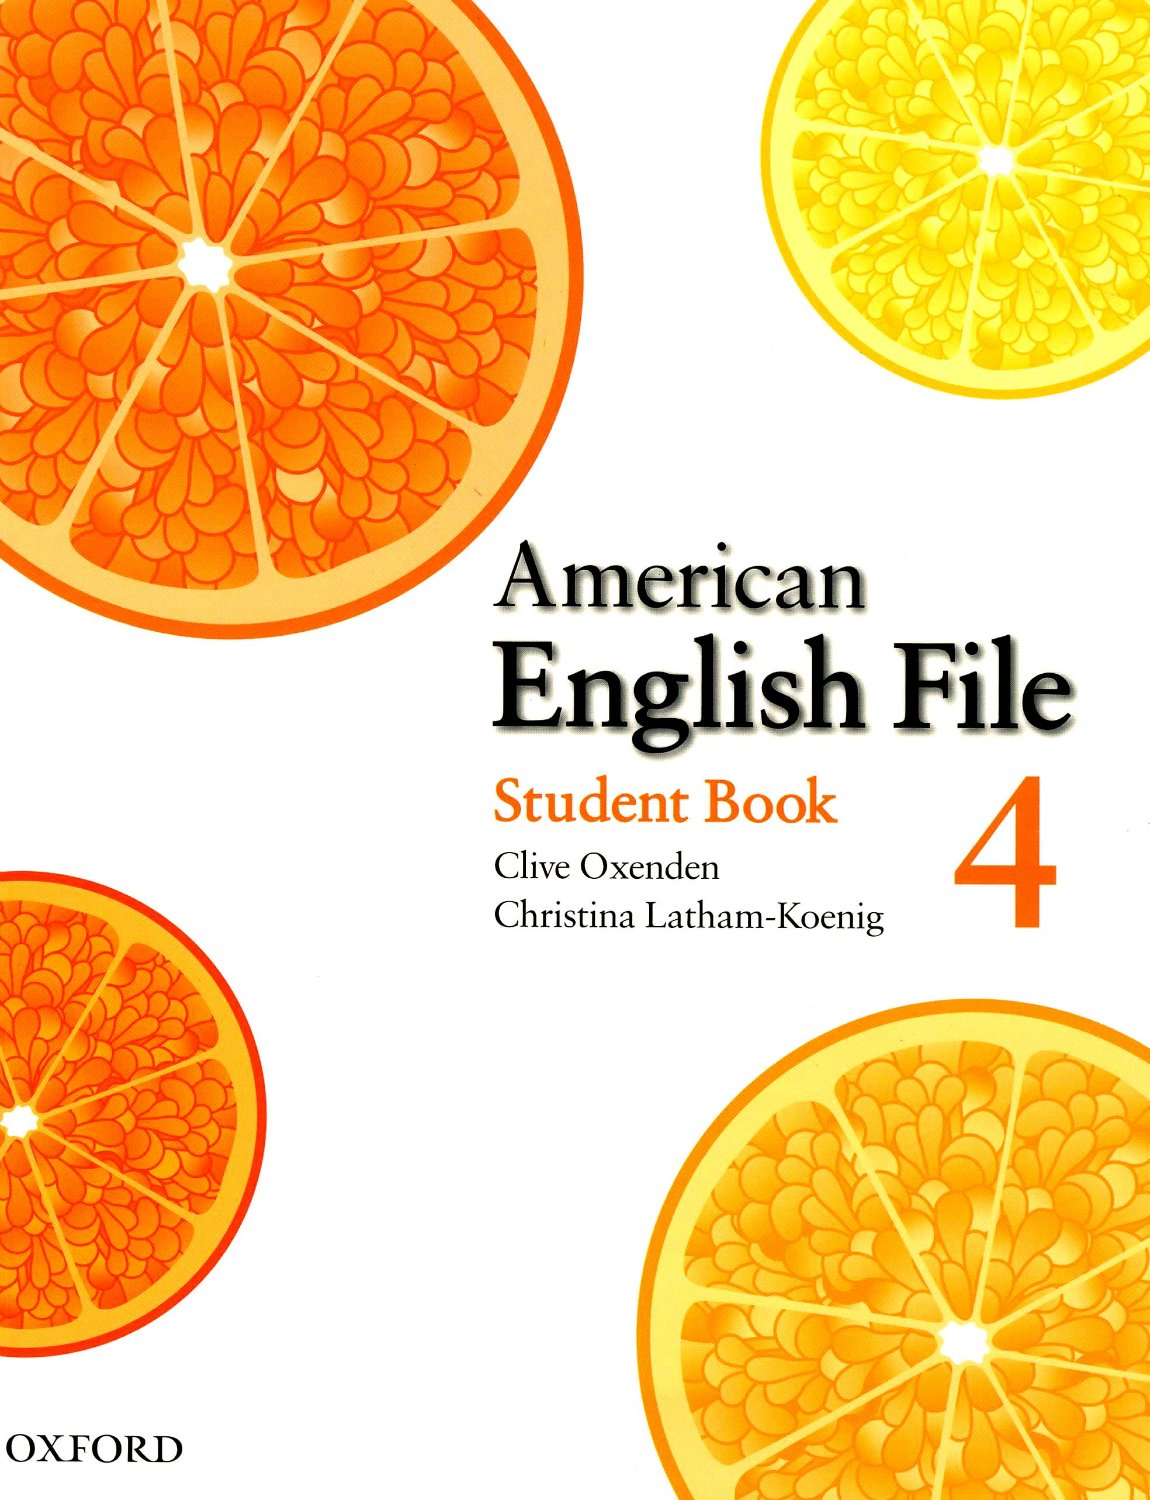 American English File 4 - Student Book, Class Audio CDs, DVD video, MultiROM, Test Genera